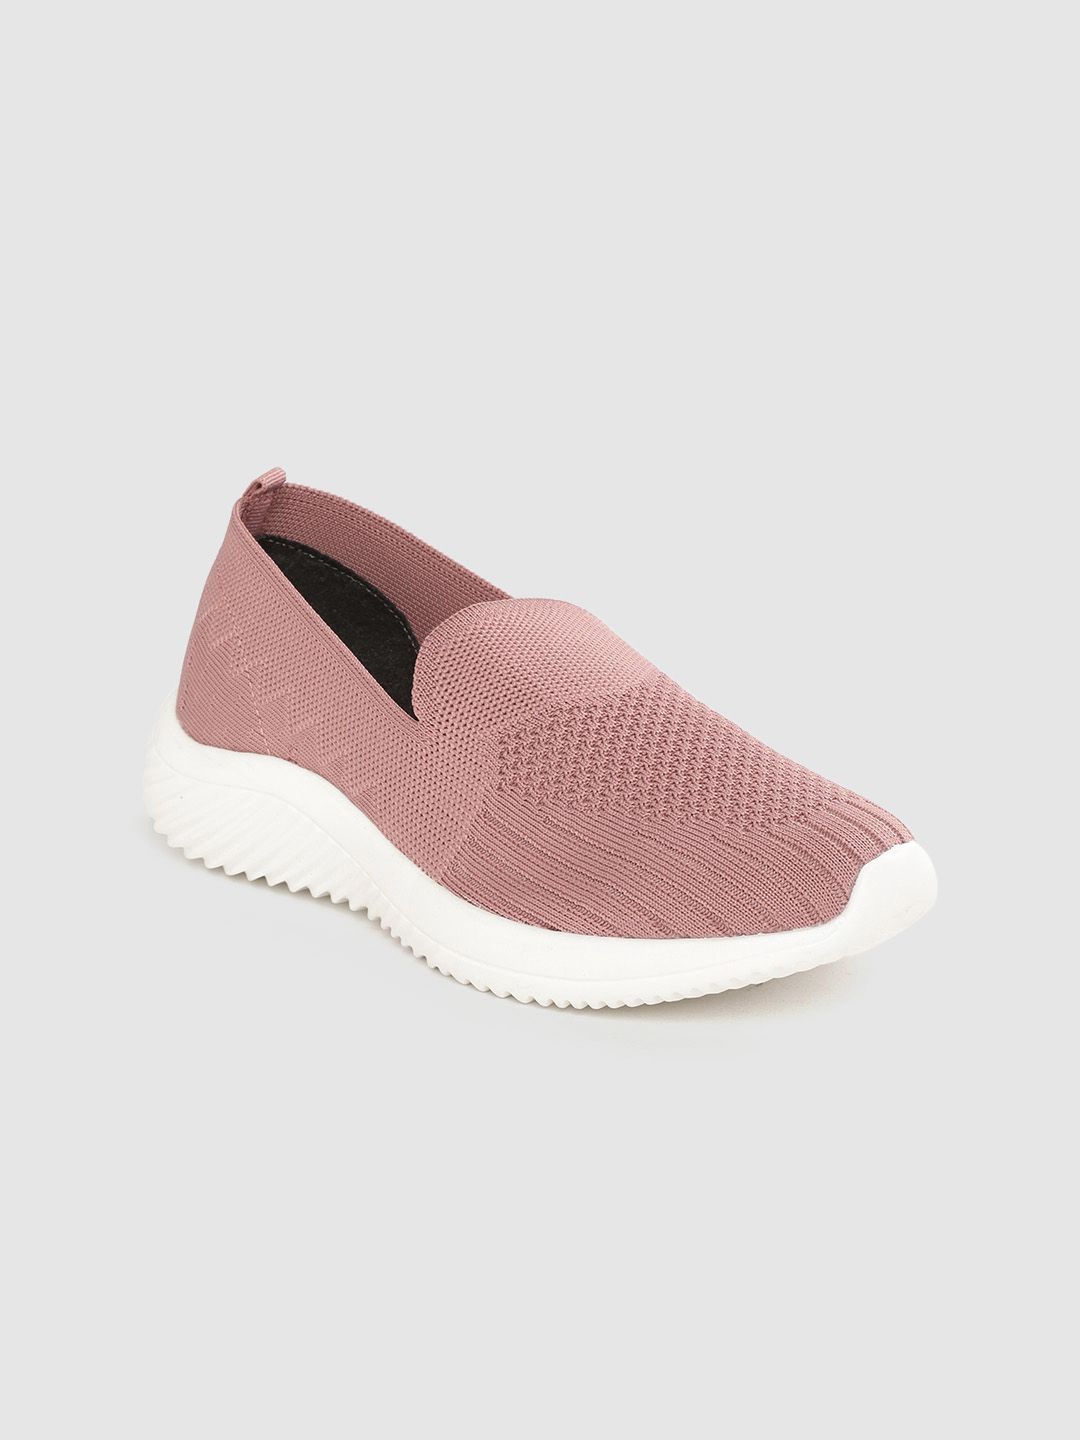 Allen Solly Women Dusty Pink Woven Design Slip-On Sneakers Price in India